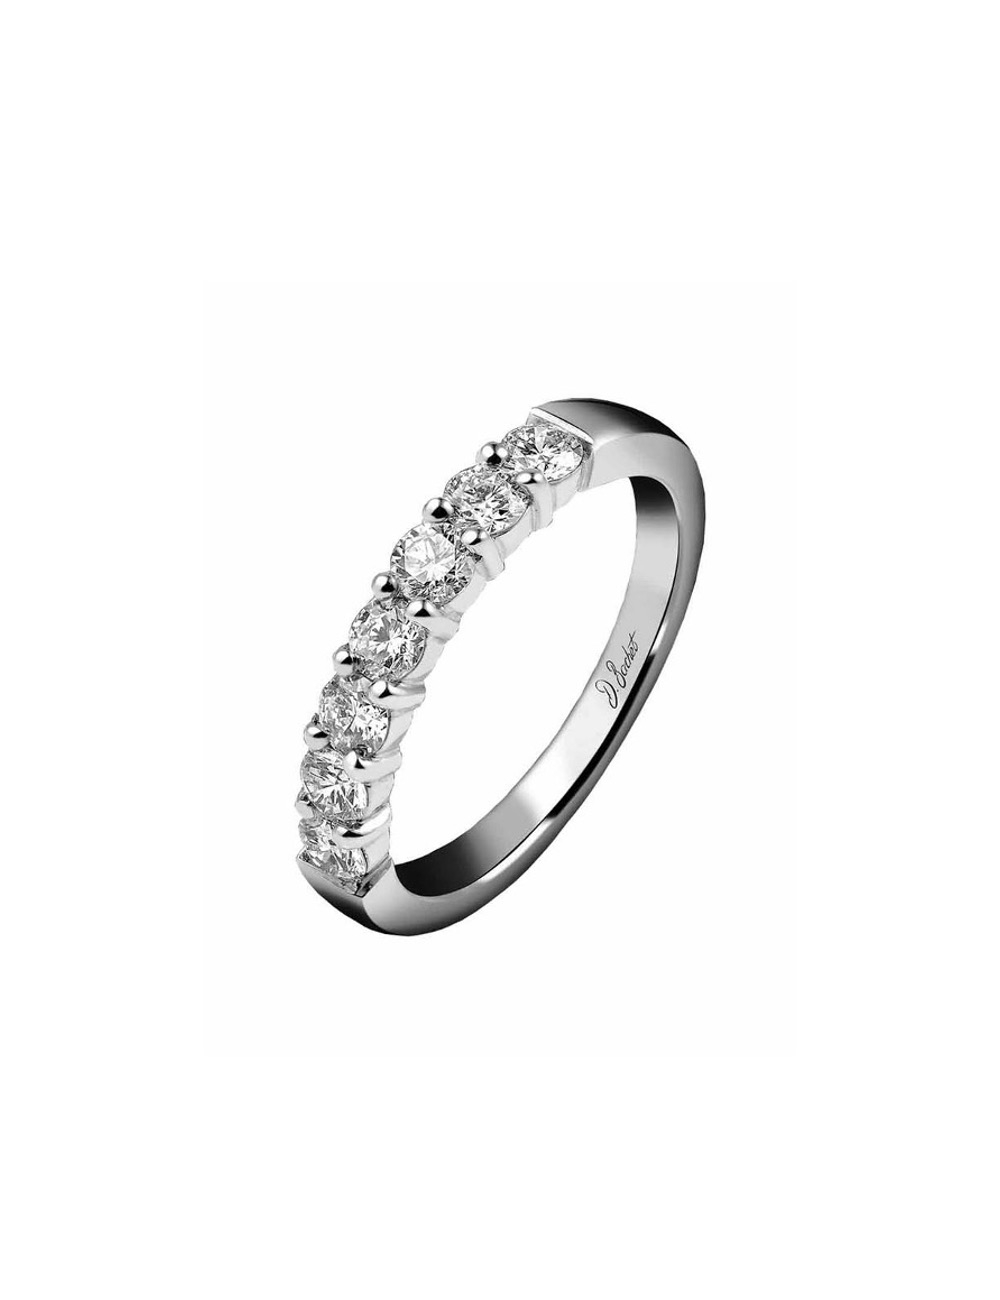 Platinum wedding ring for women, elegantly designed with white diamonds in prong settings, radiating sophistication.